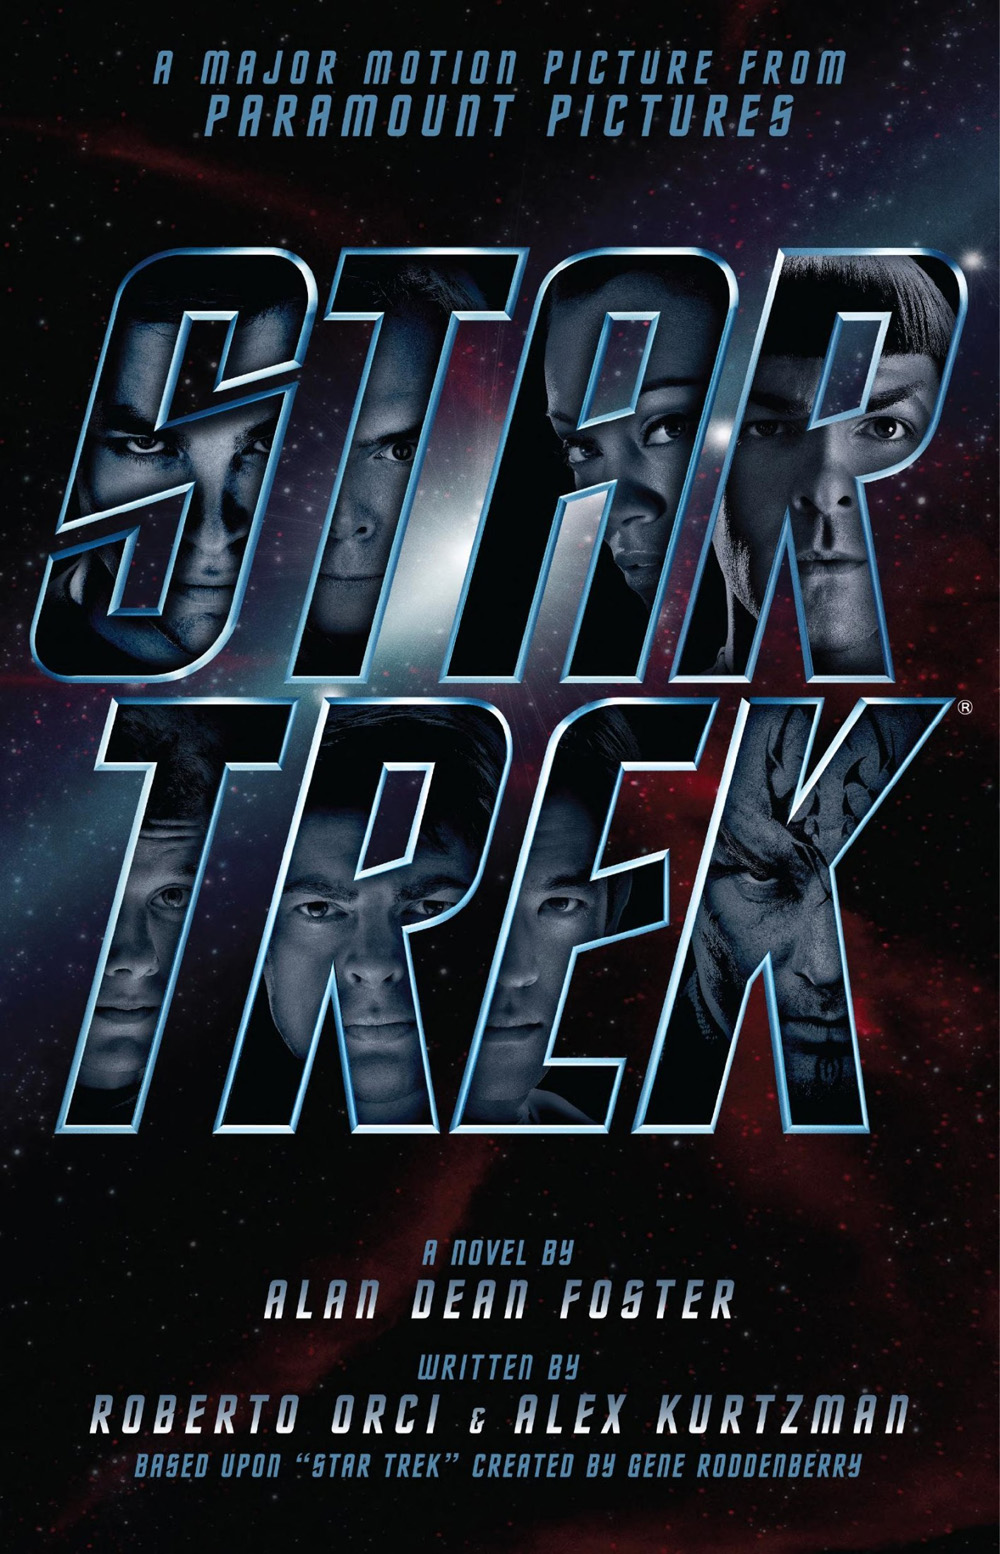 Star Trek (May 2009)